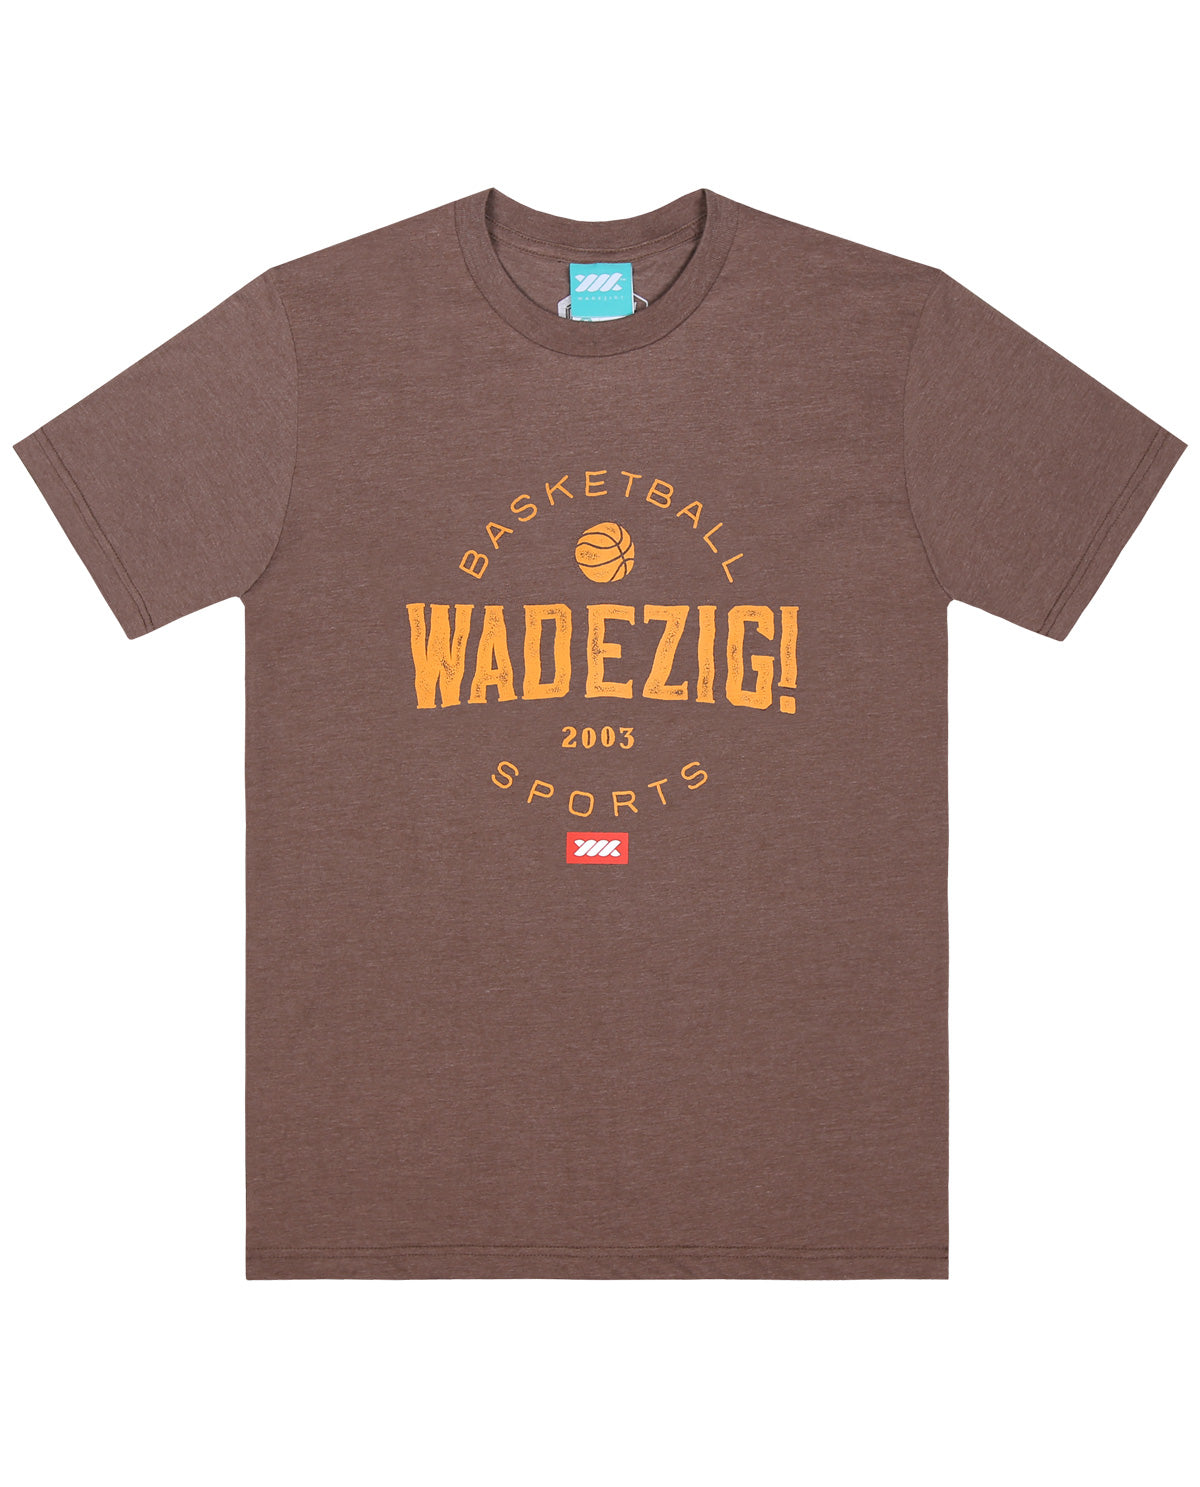 Wadezig! T-Shirt - The Court  Brown